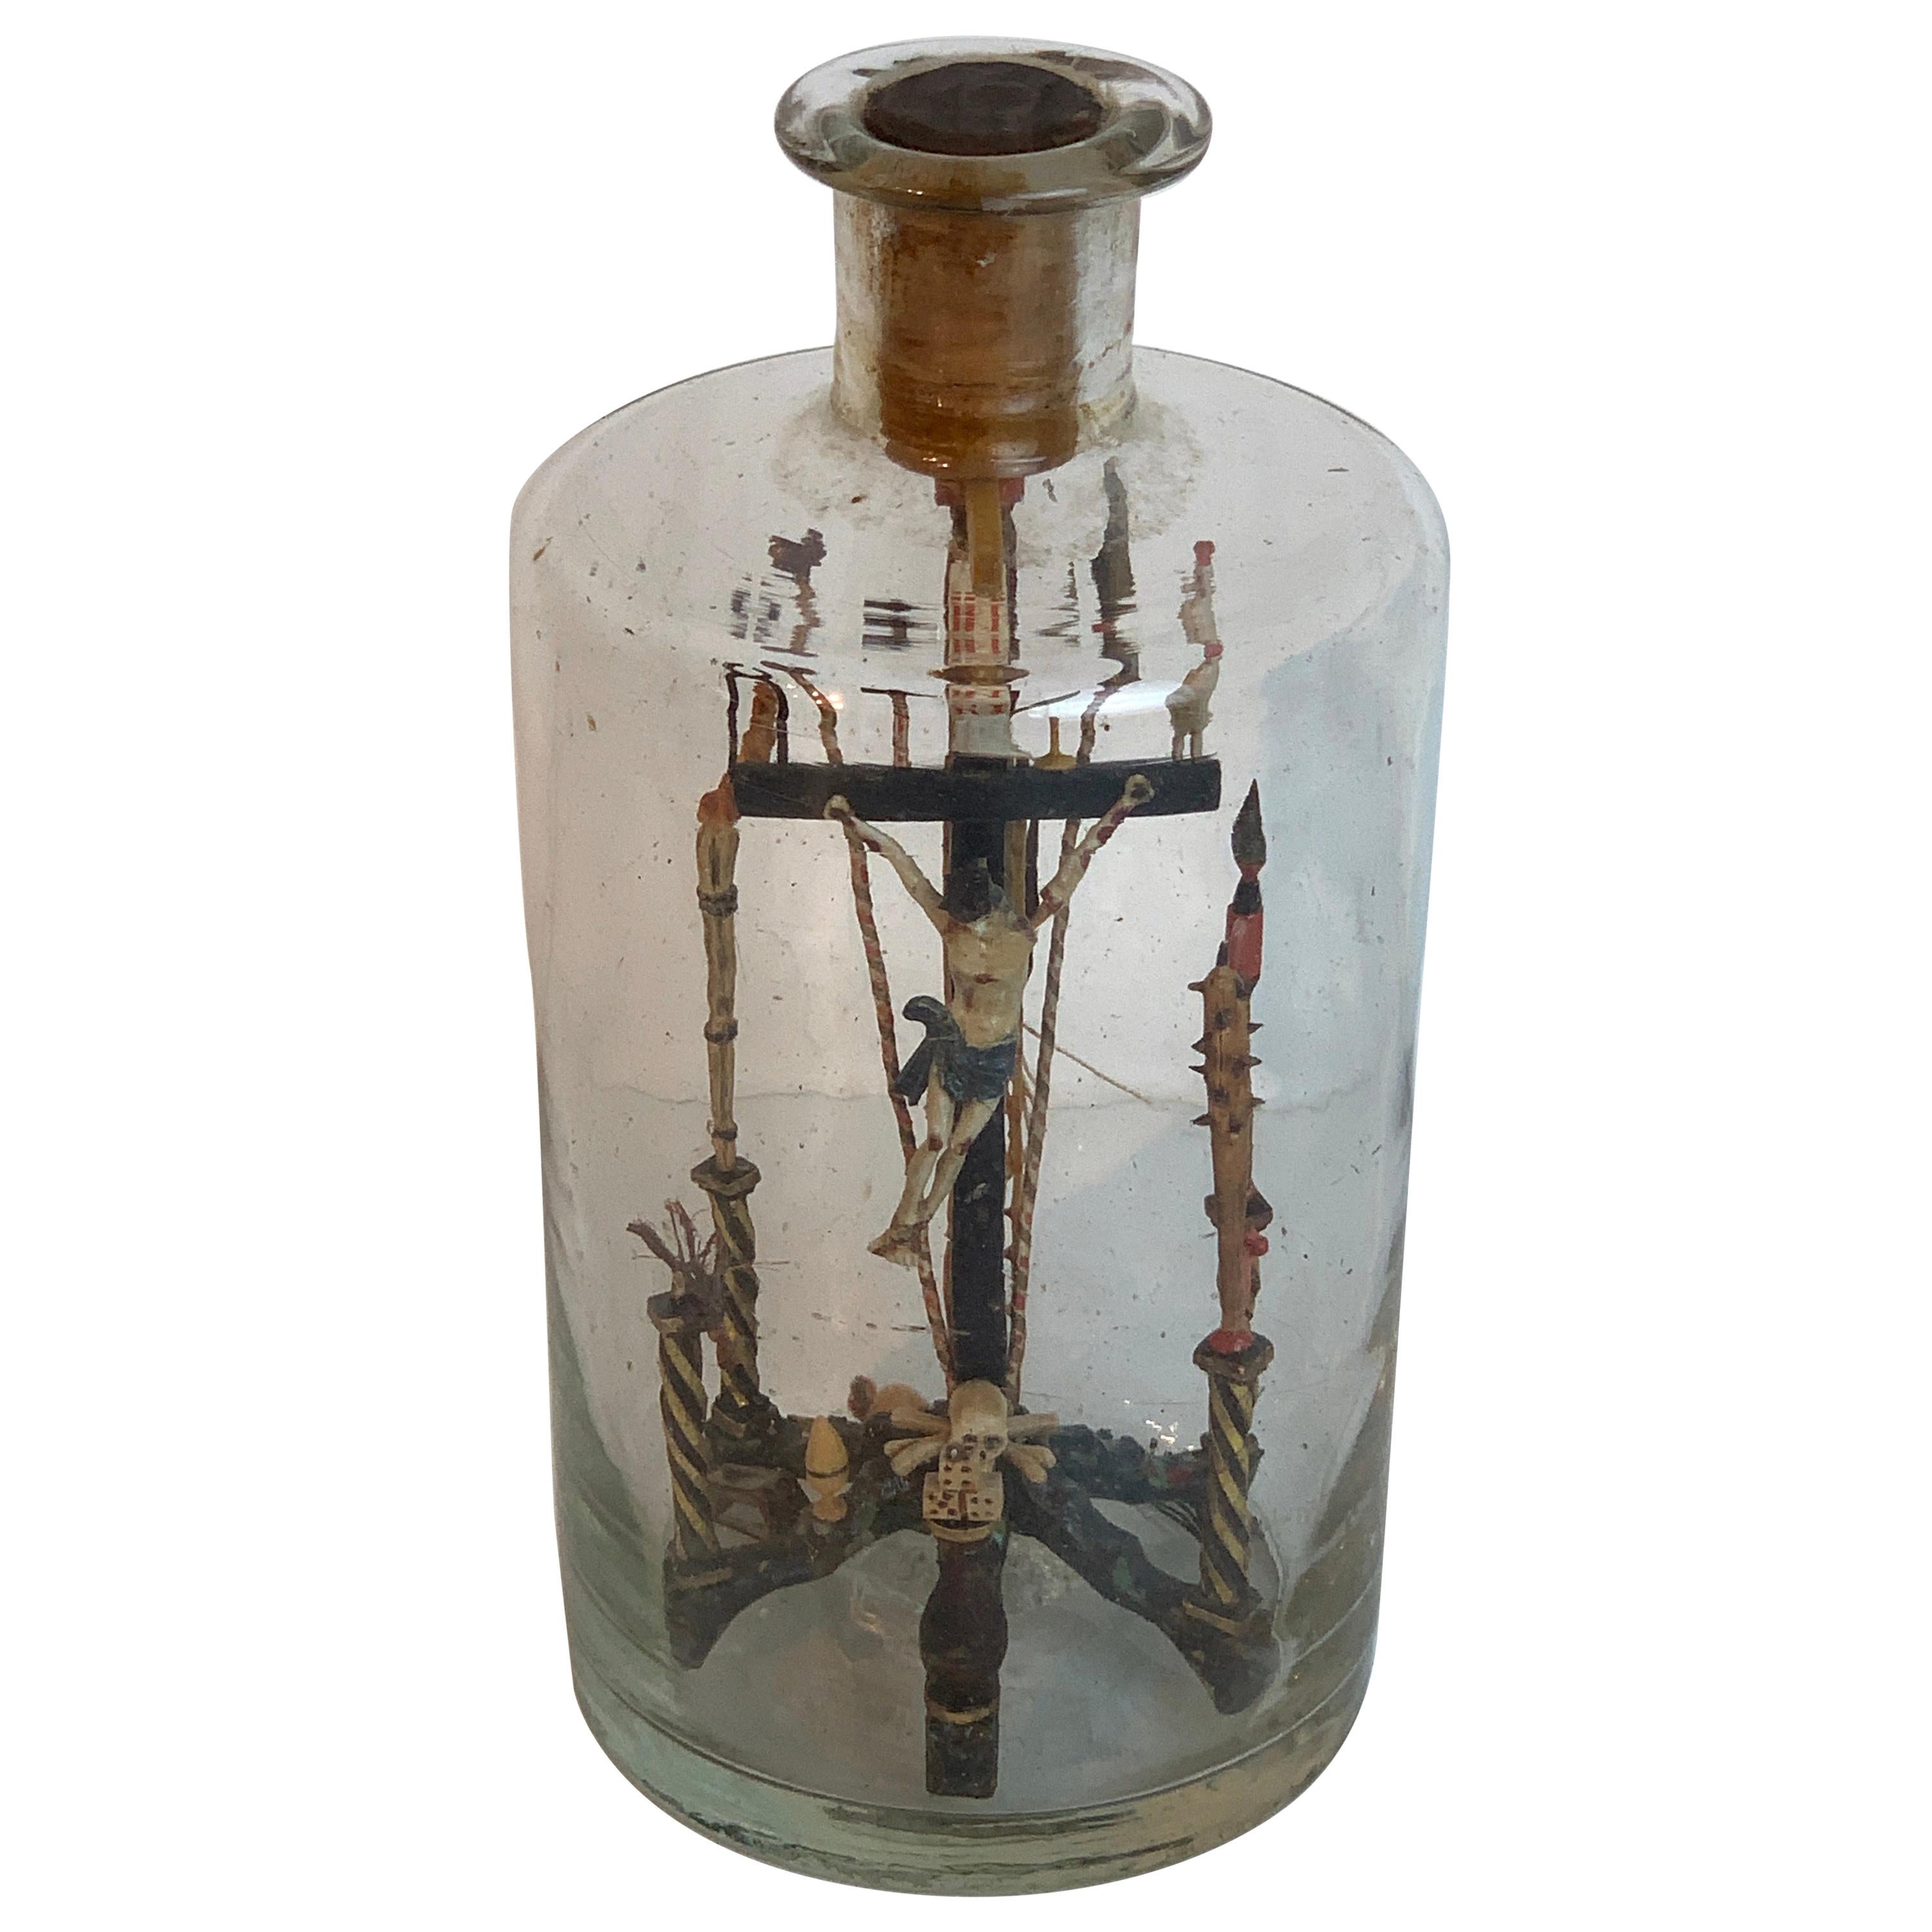 Folk Art Crucifixion Scene in a Bottle